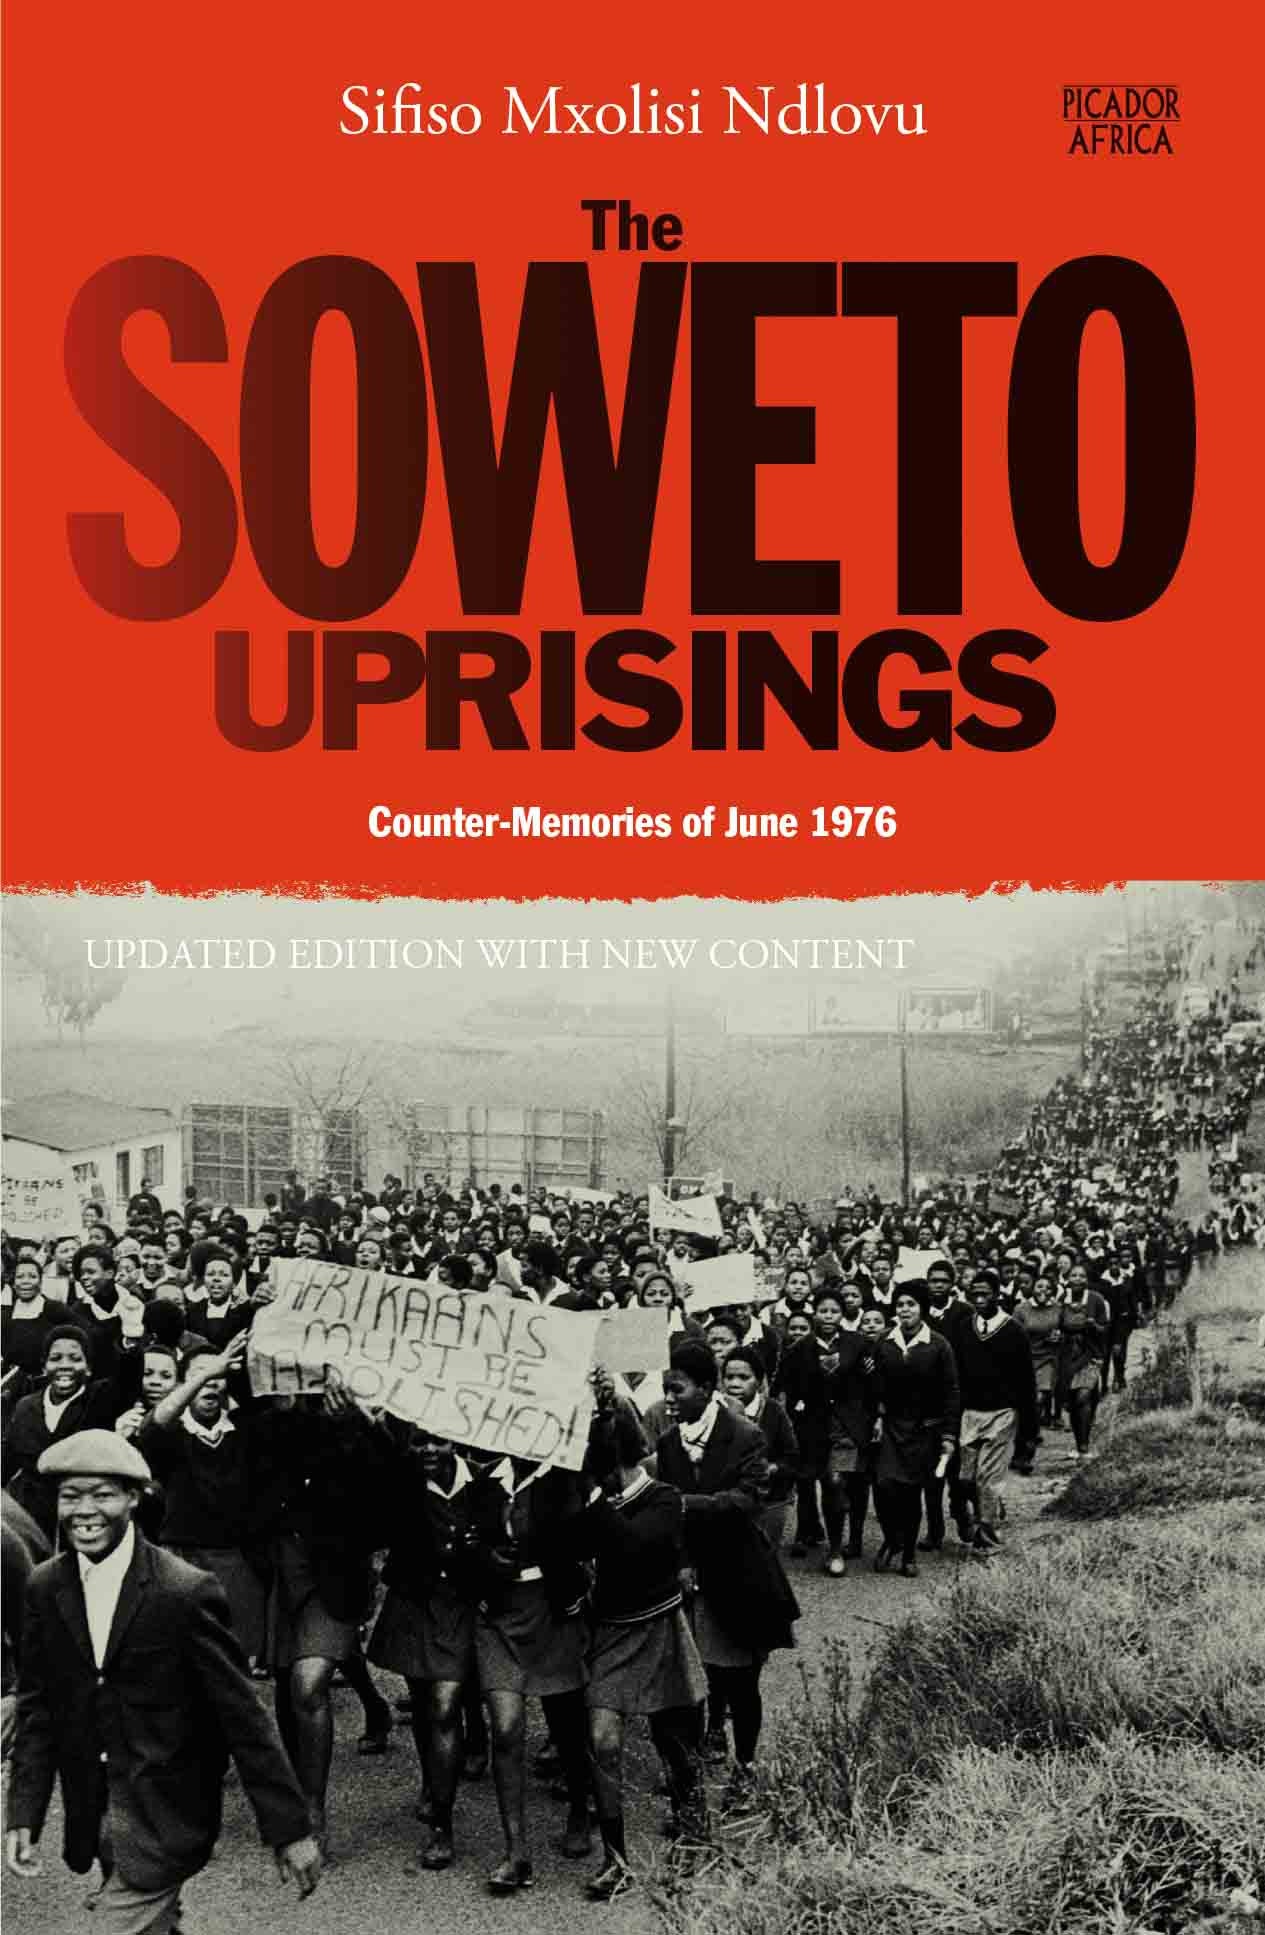 The Soweto uprisings counter memories of June 1976, by Sifiso Mxolisi Ndlovu